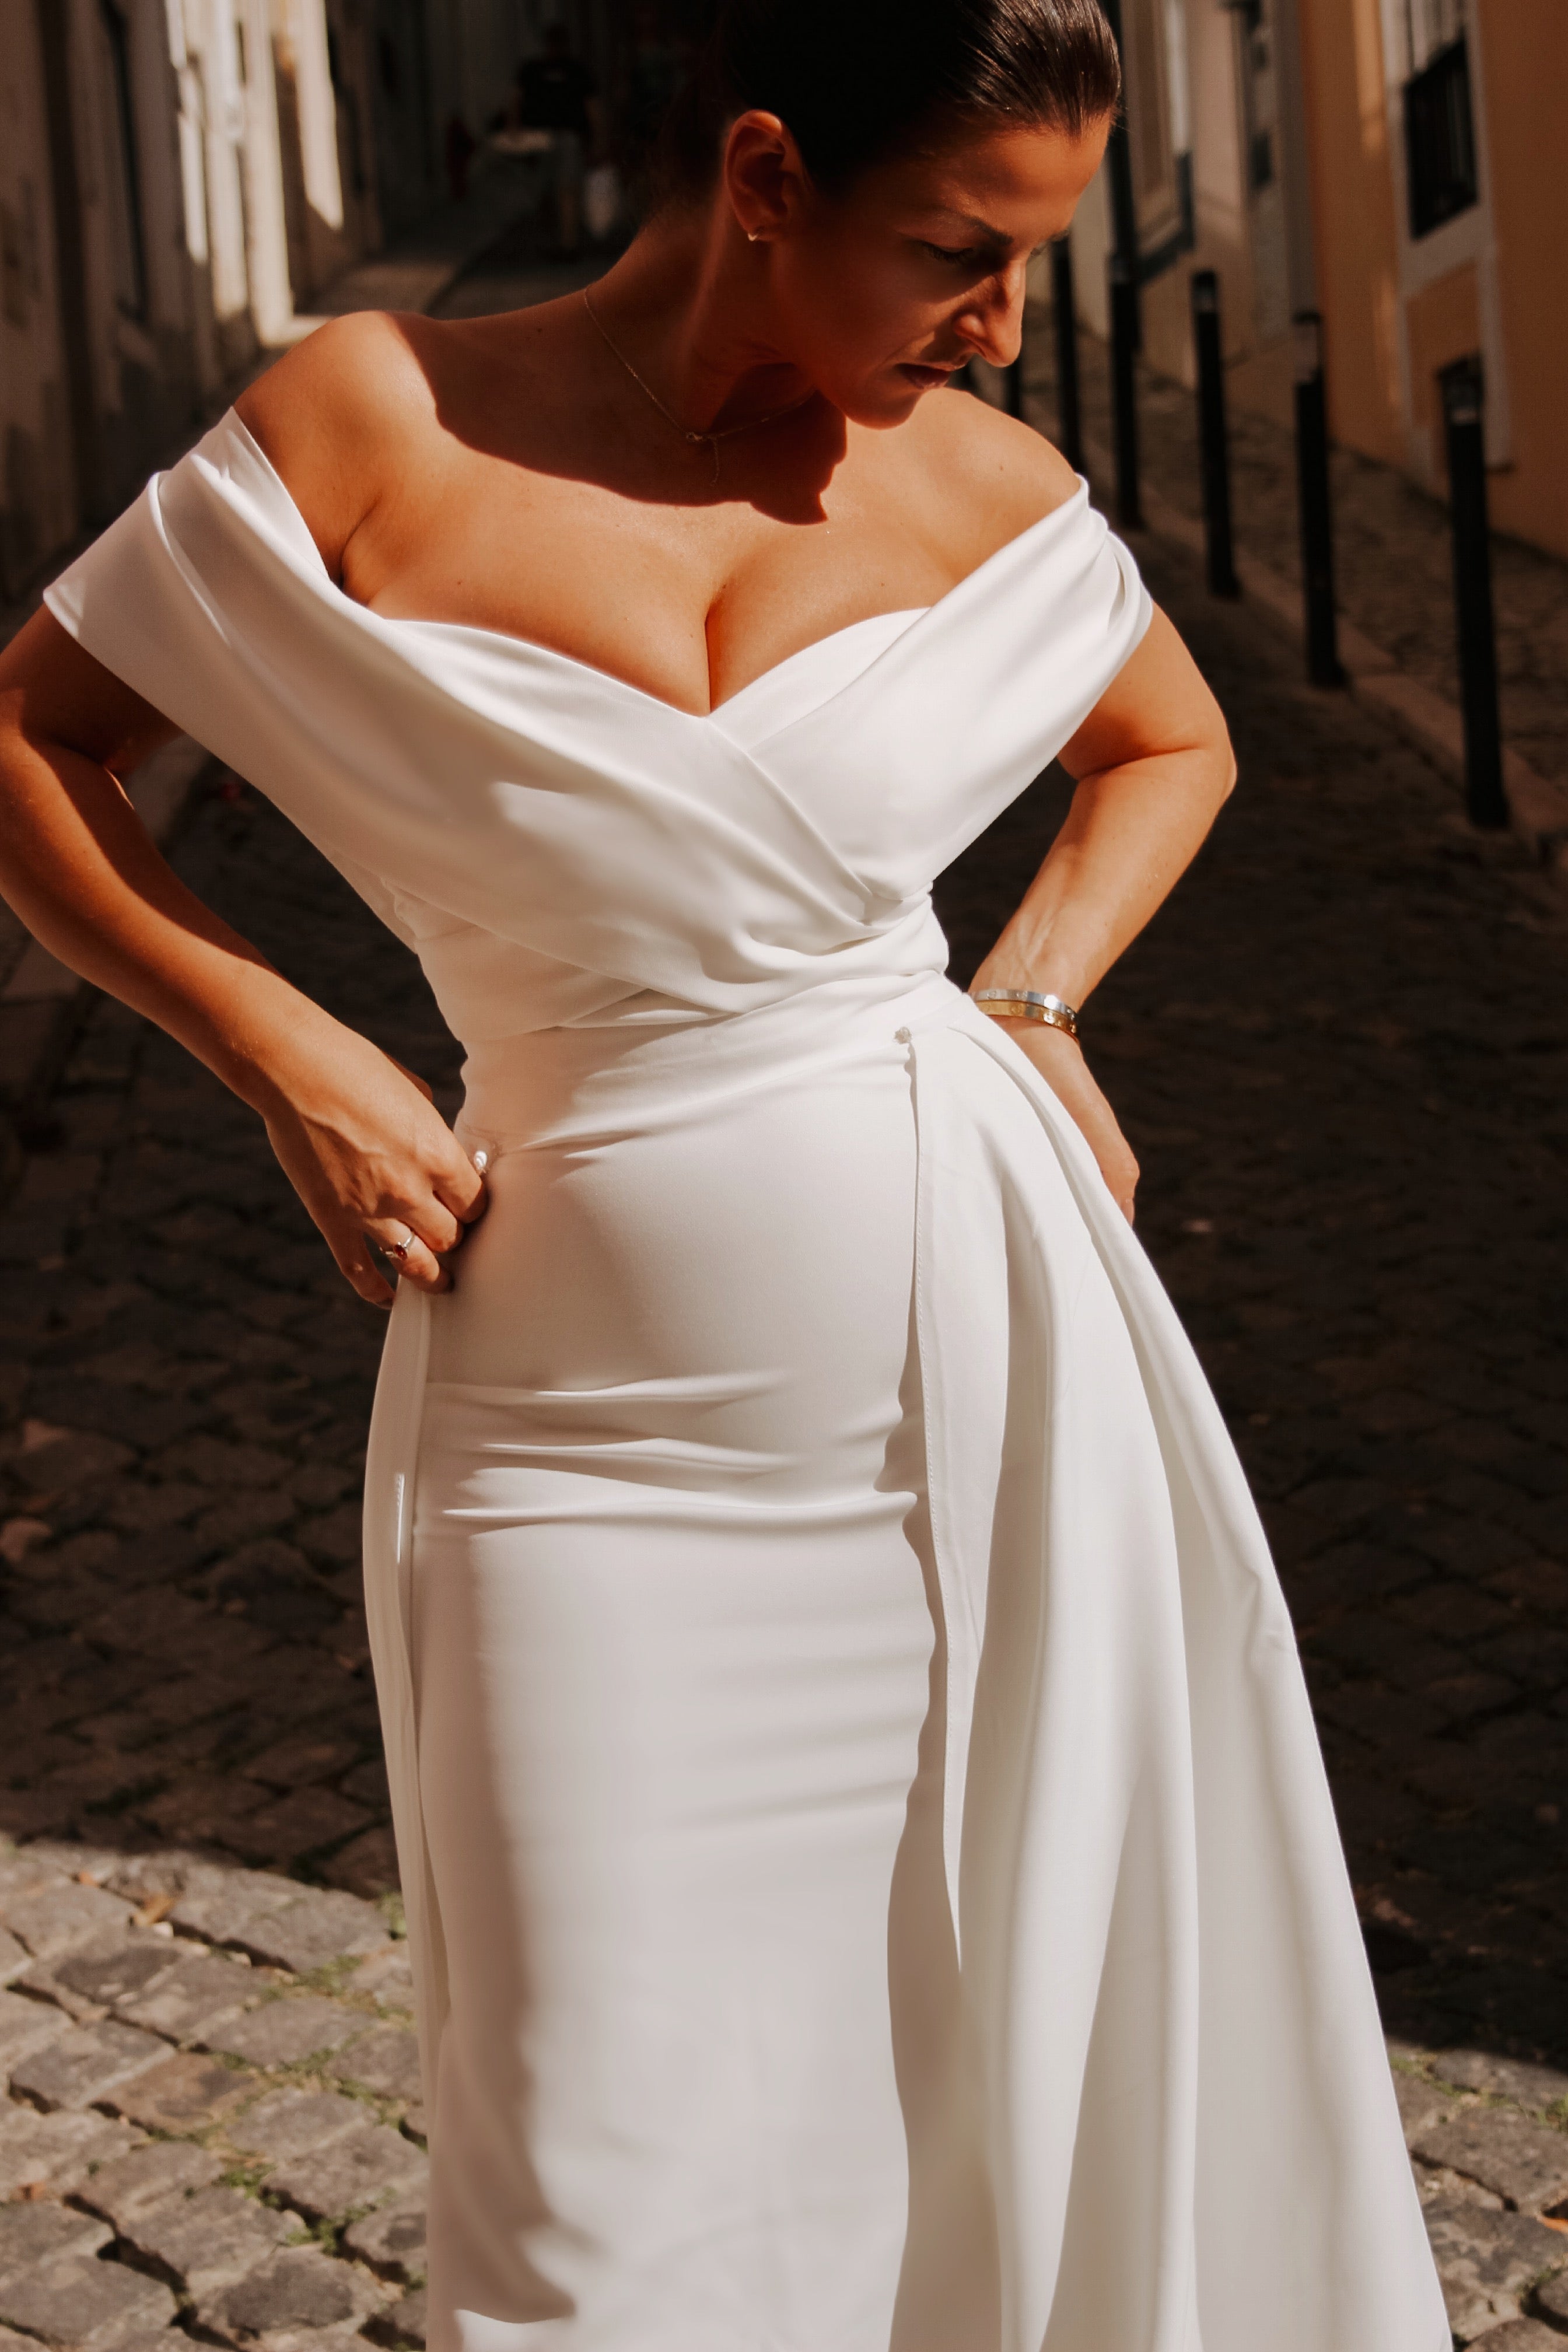 Detachable Crepe Bridal Overskirt by Velo Bianco